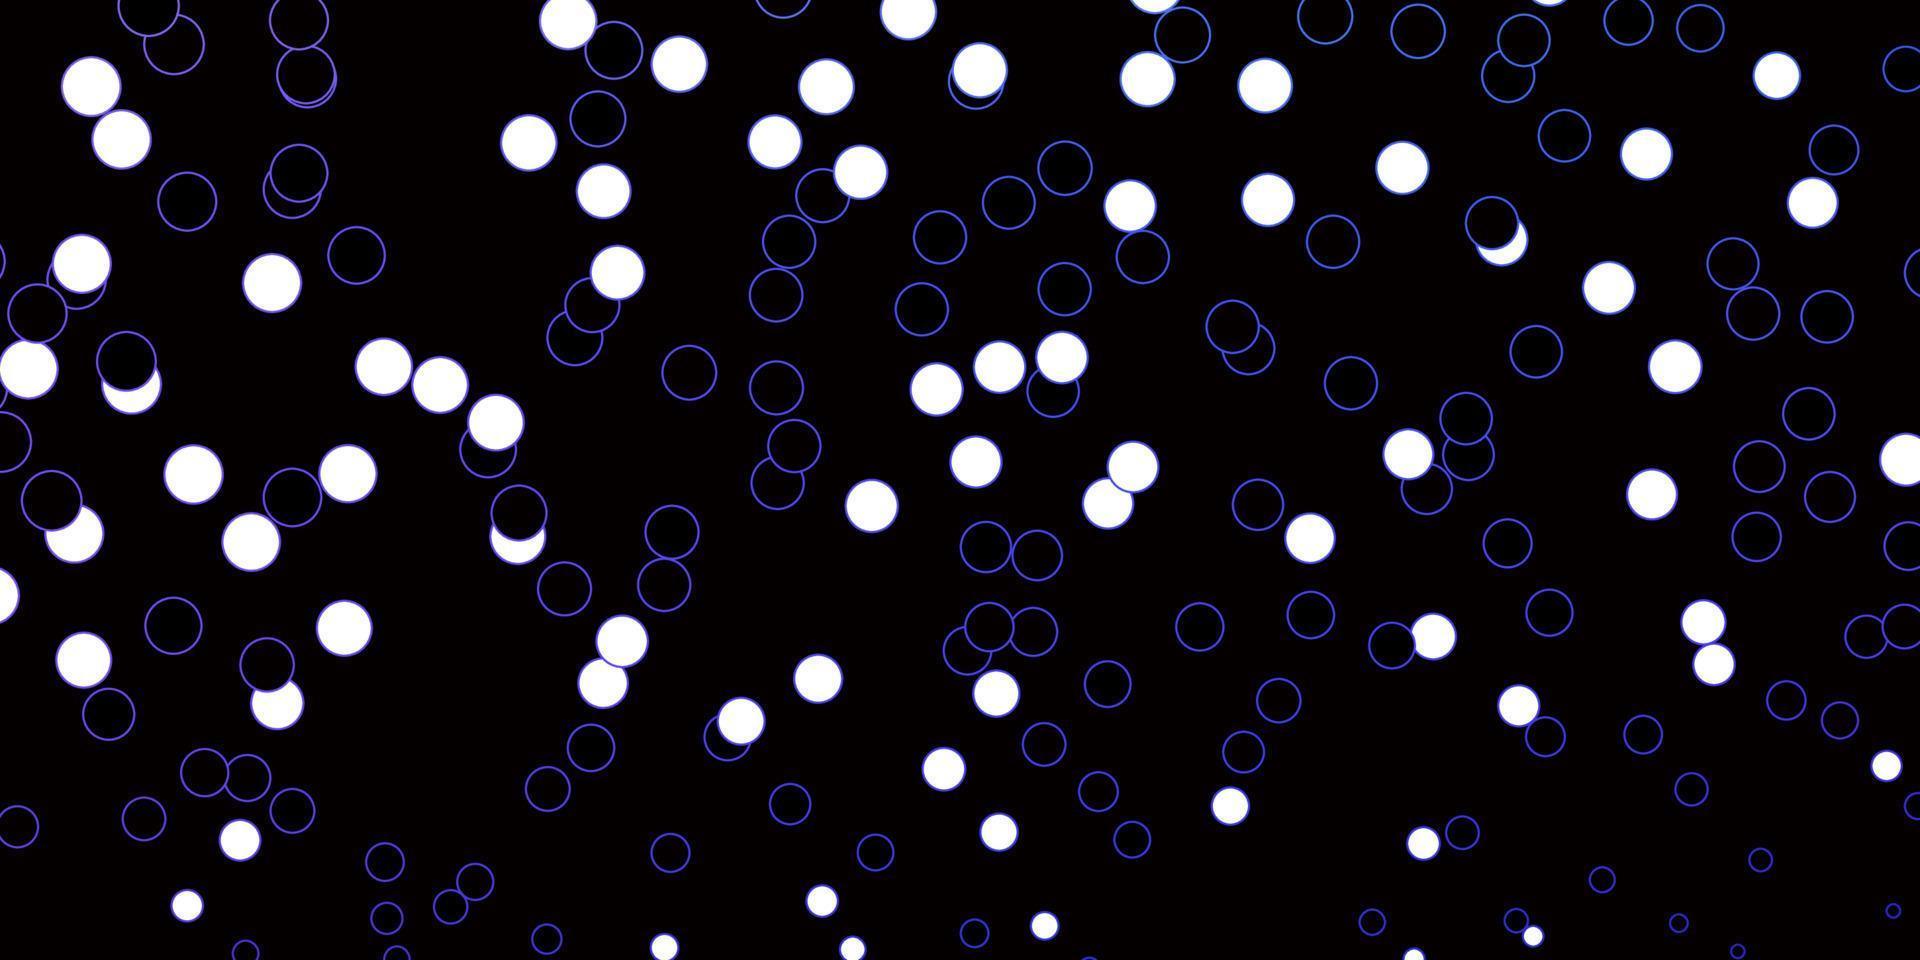 pano de fundo vector roxo escuro com pontos.